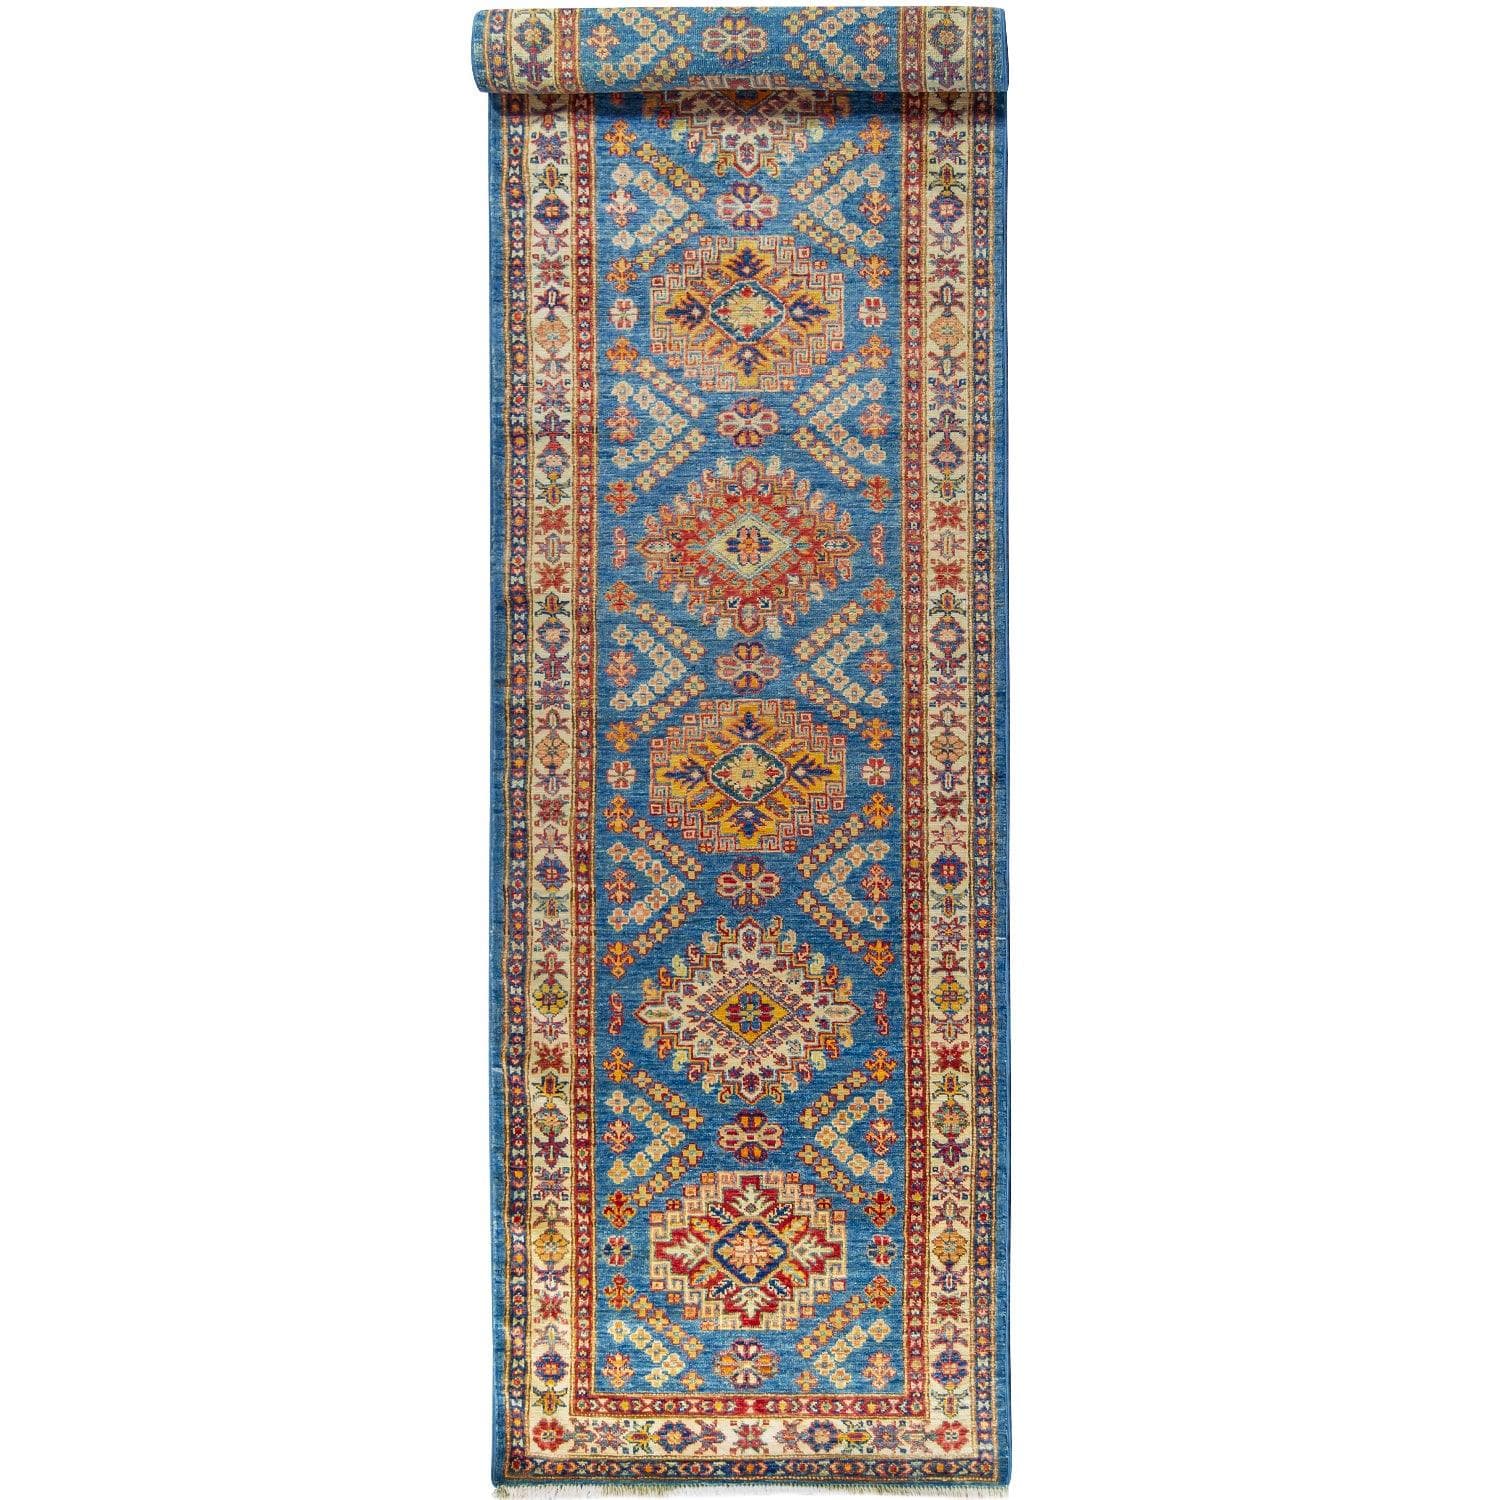 Fine Hand-knotted Traditional Wool Super Kazak Blue Runner 82cm x 298cm